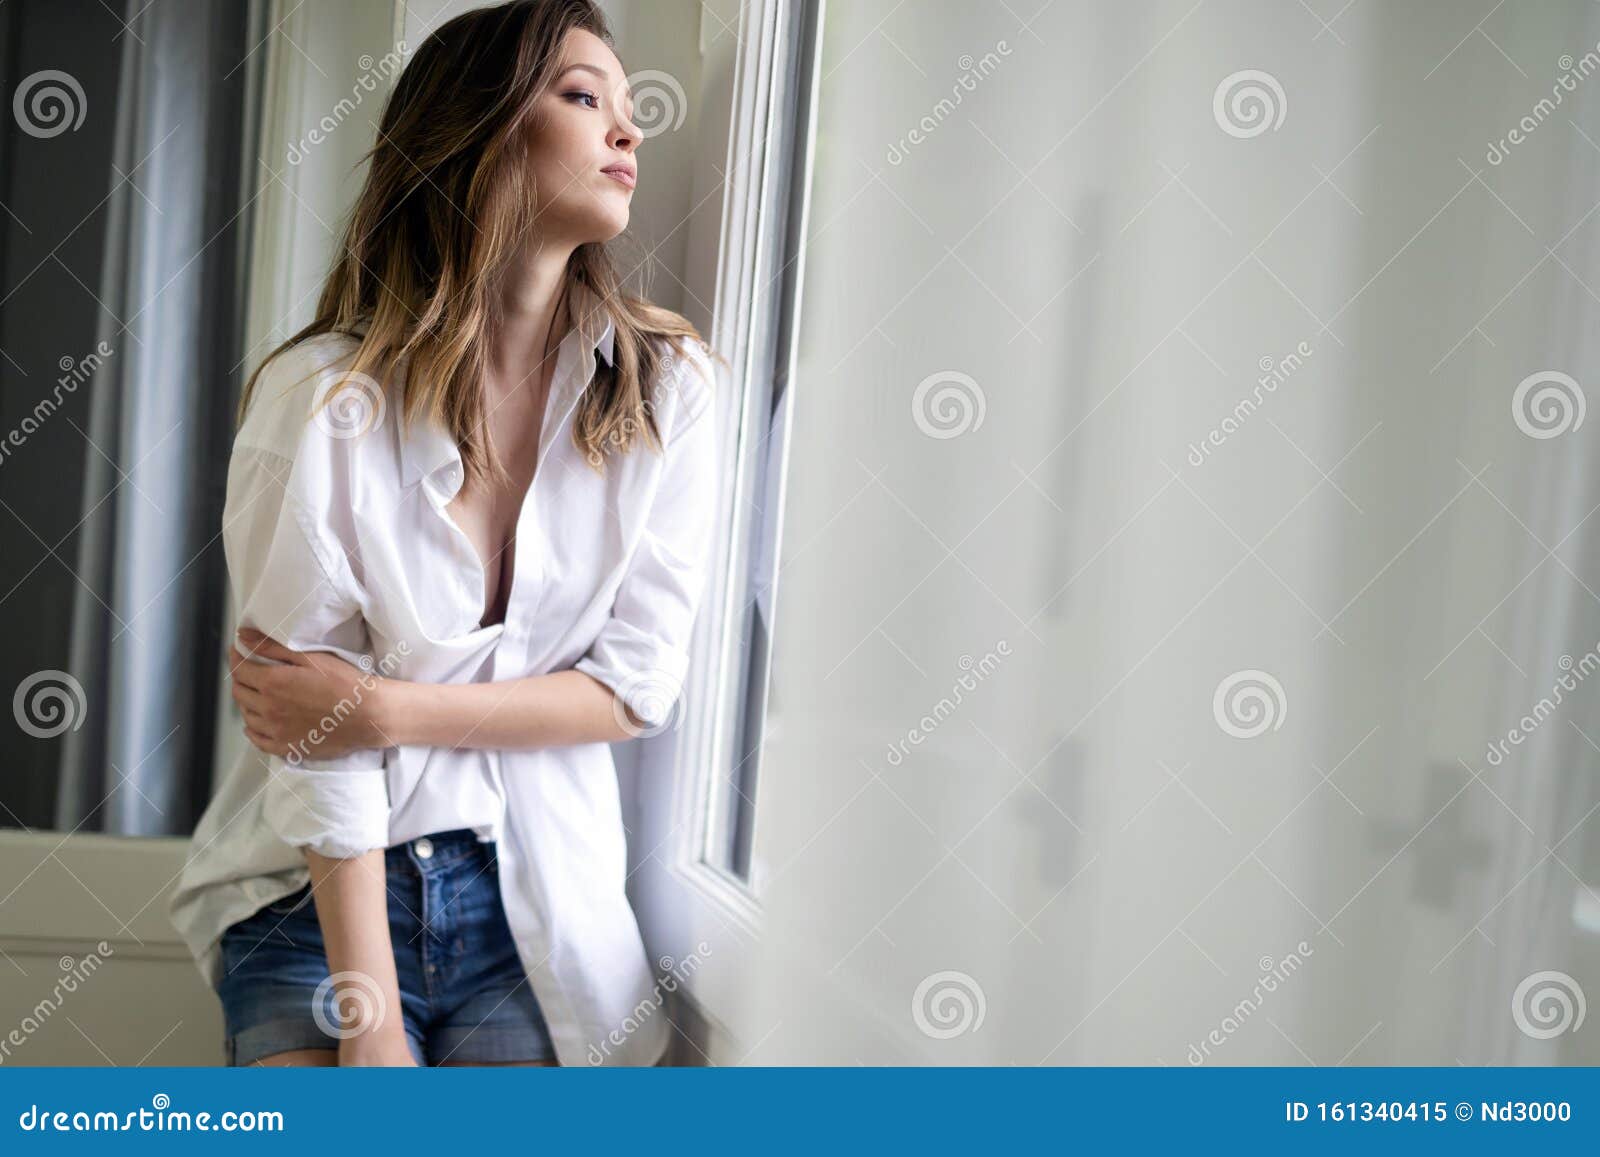 Sensual Brunette Woman Standing Near The Window In White Shirt Stock